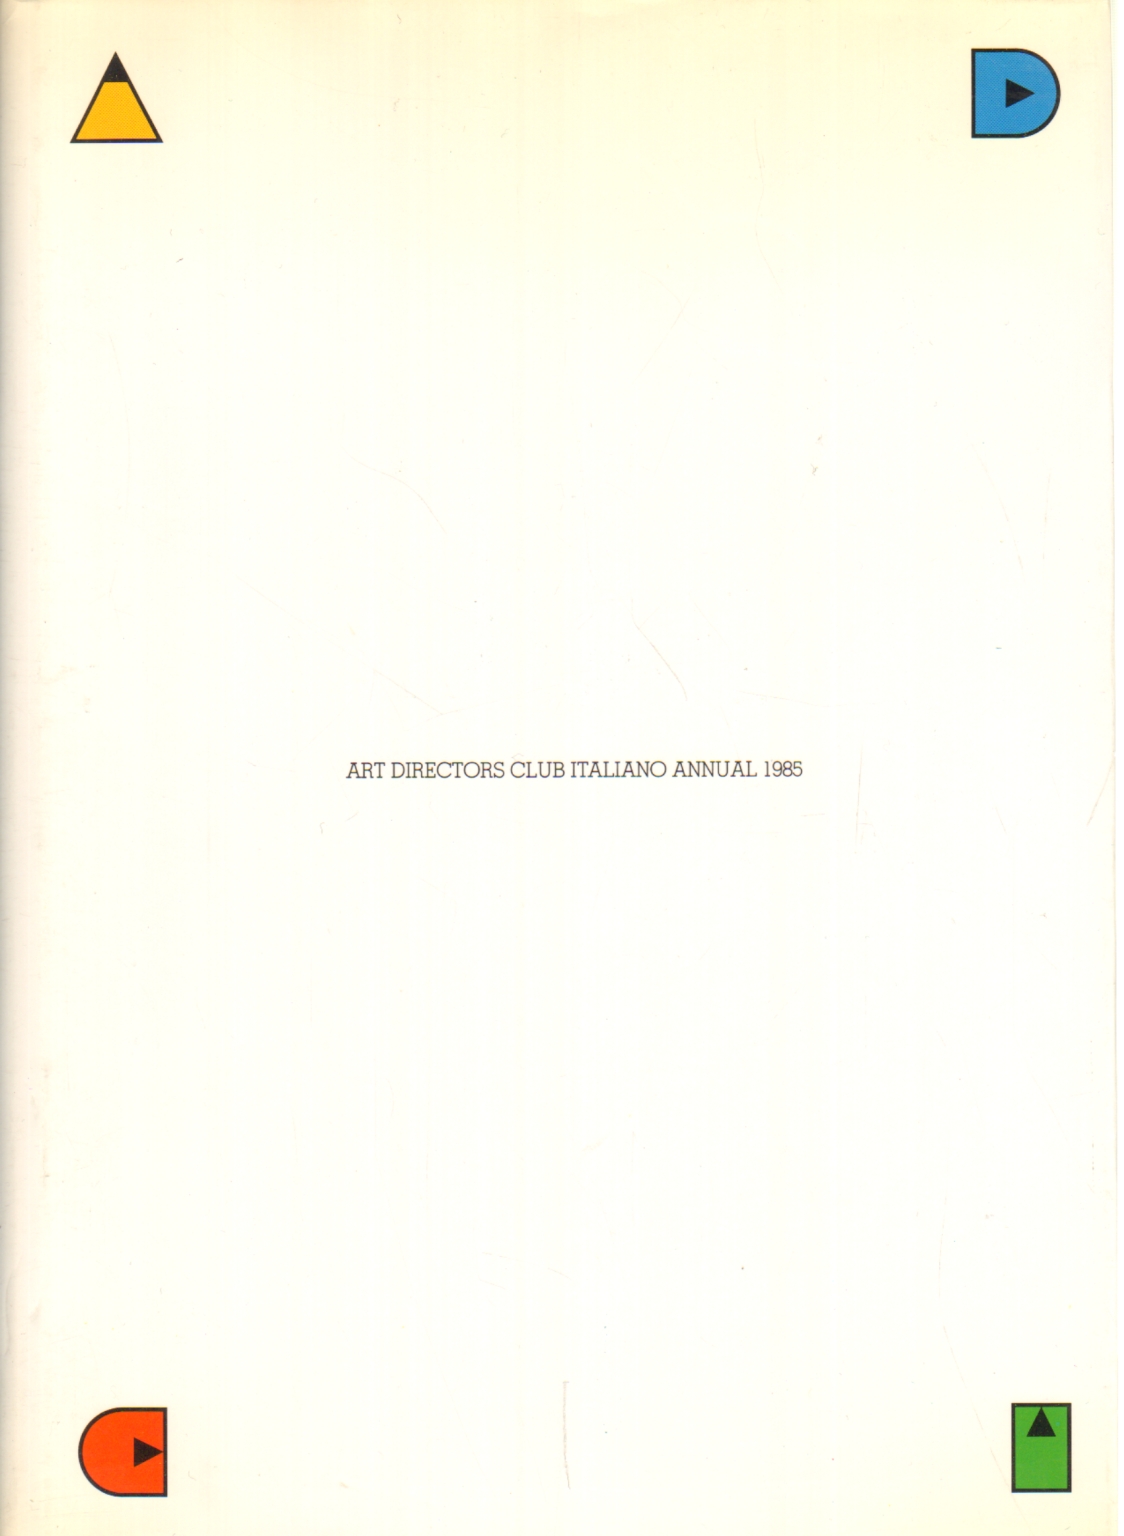 Art Directors Club Italiano annual 1985, AA.VV.